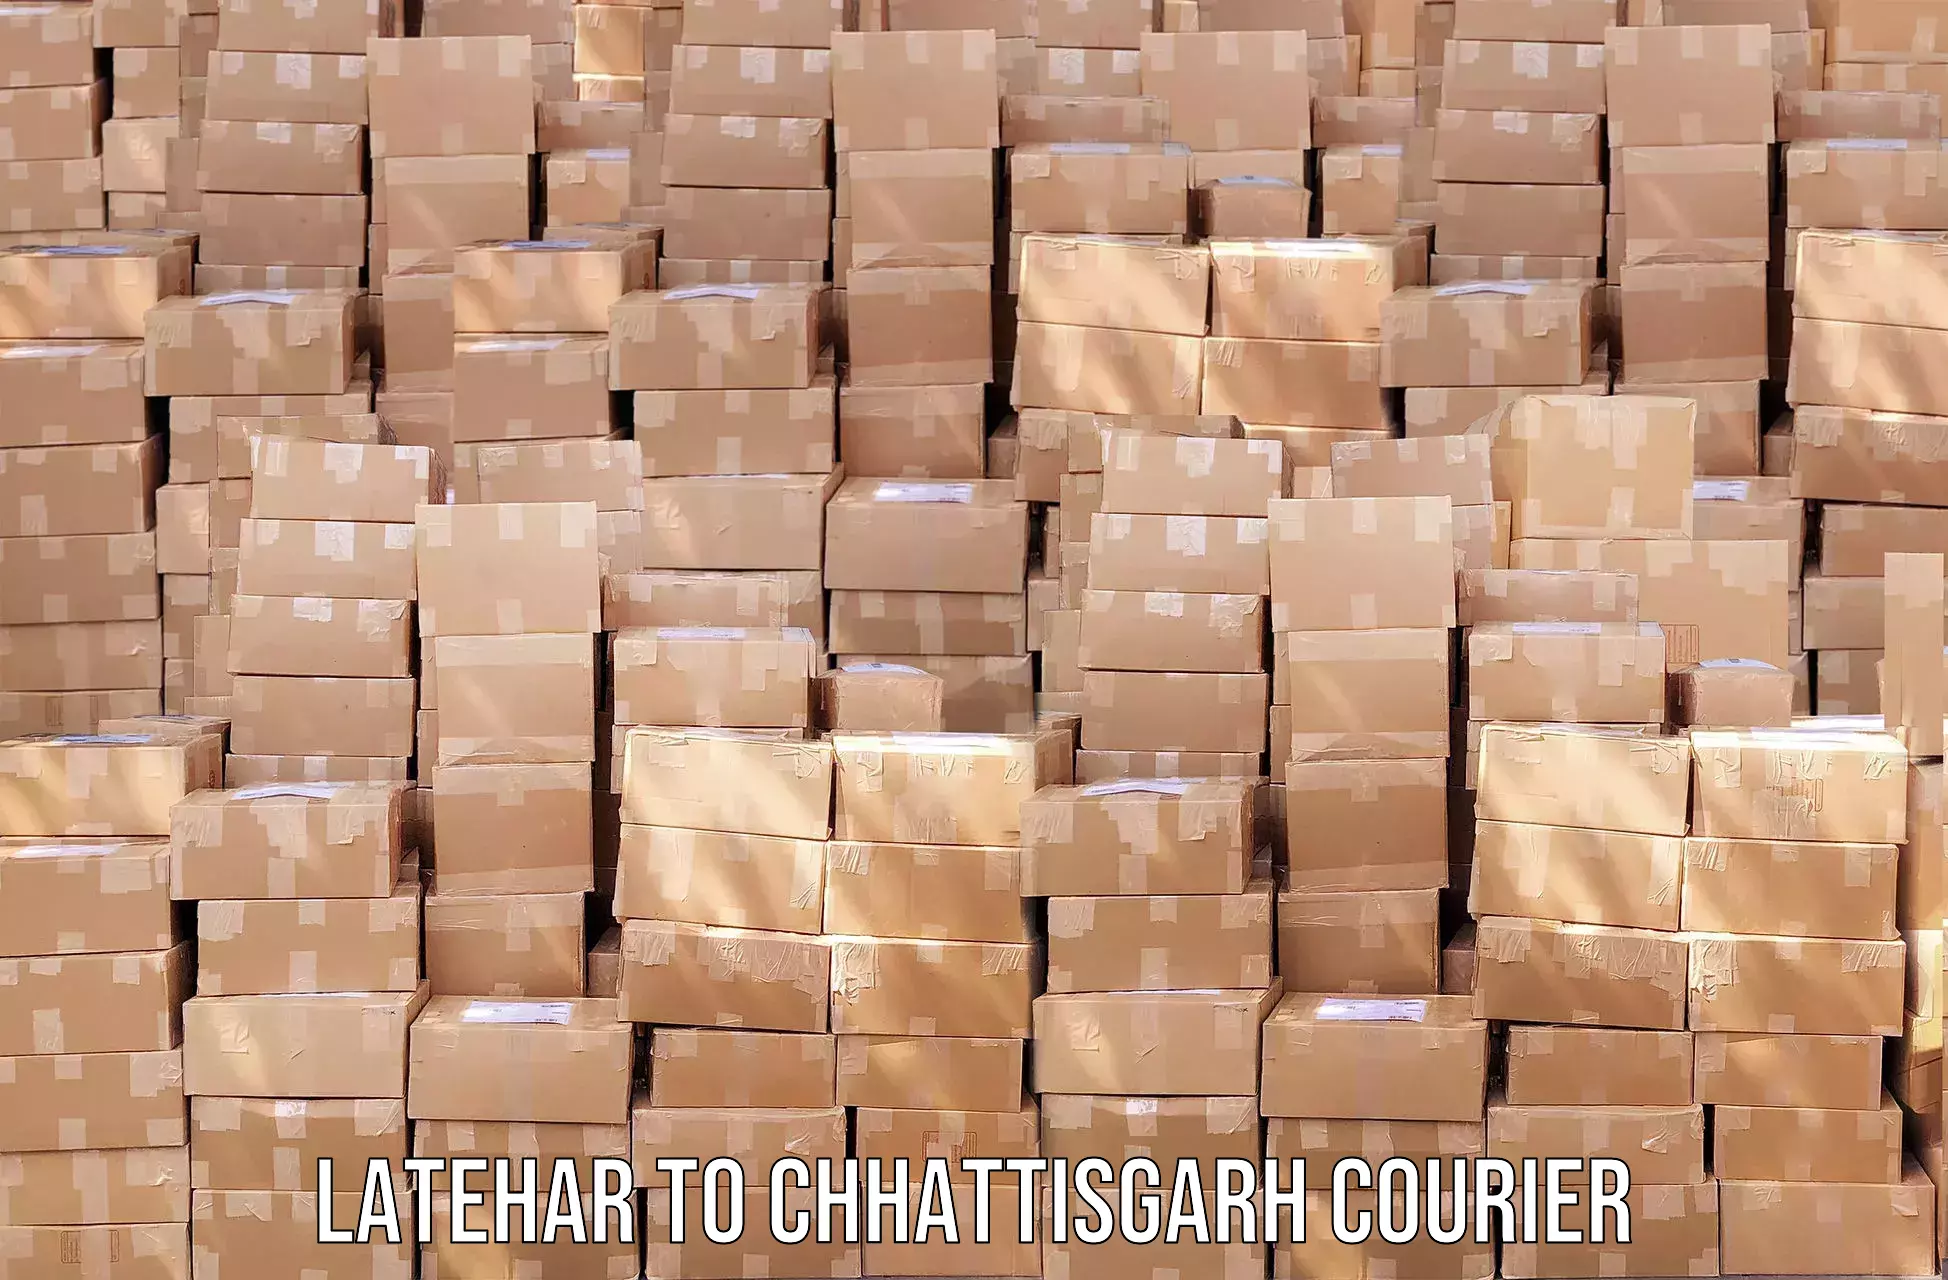 Courier service innovation Latehar to Chhattisgarh